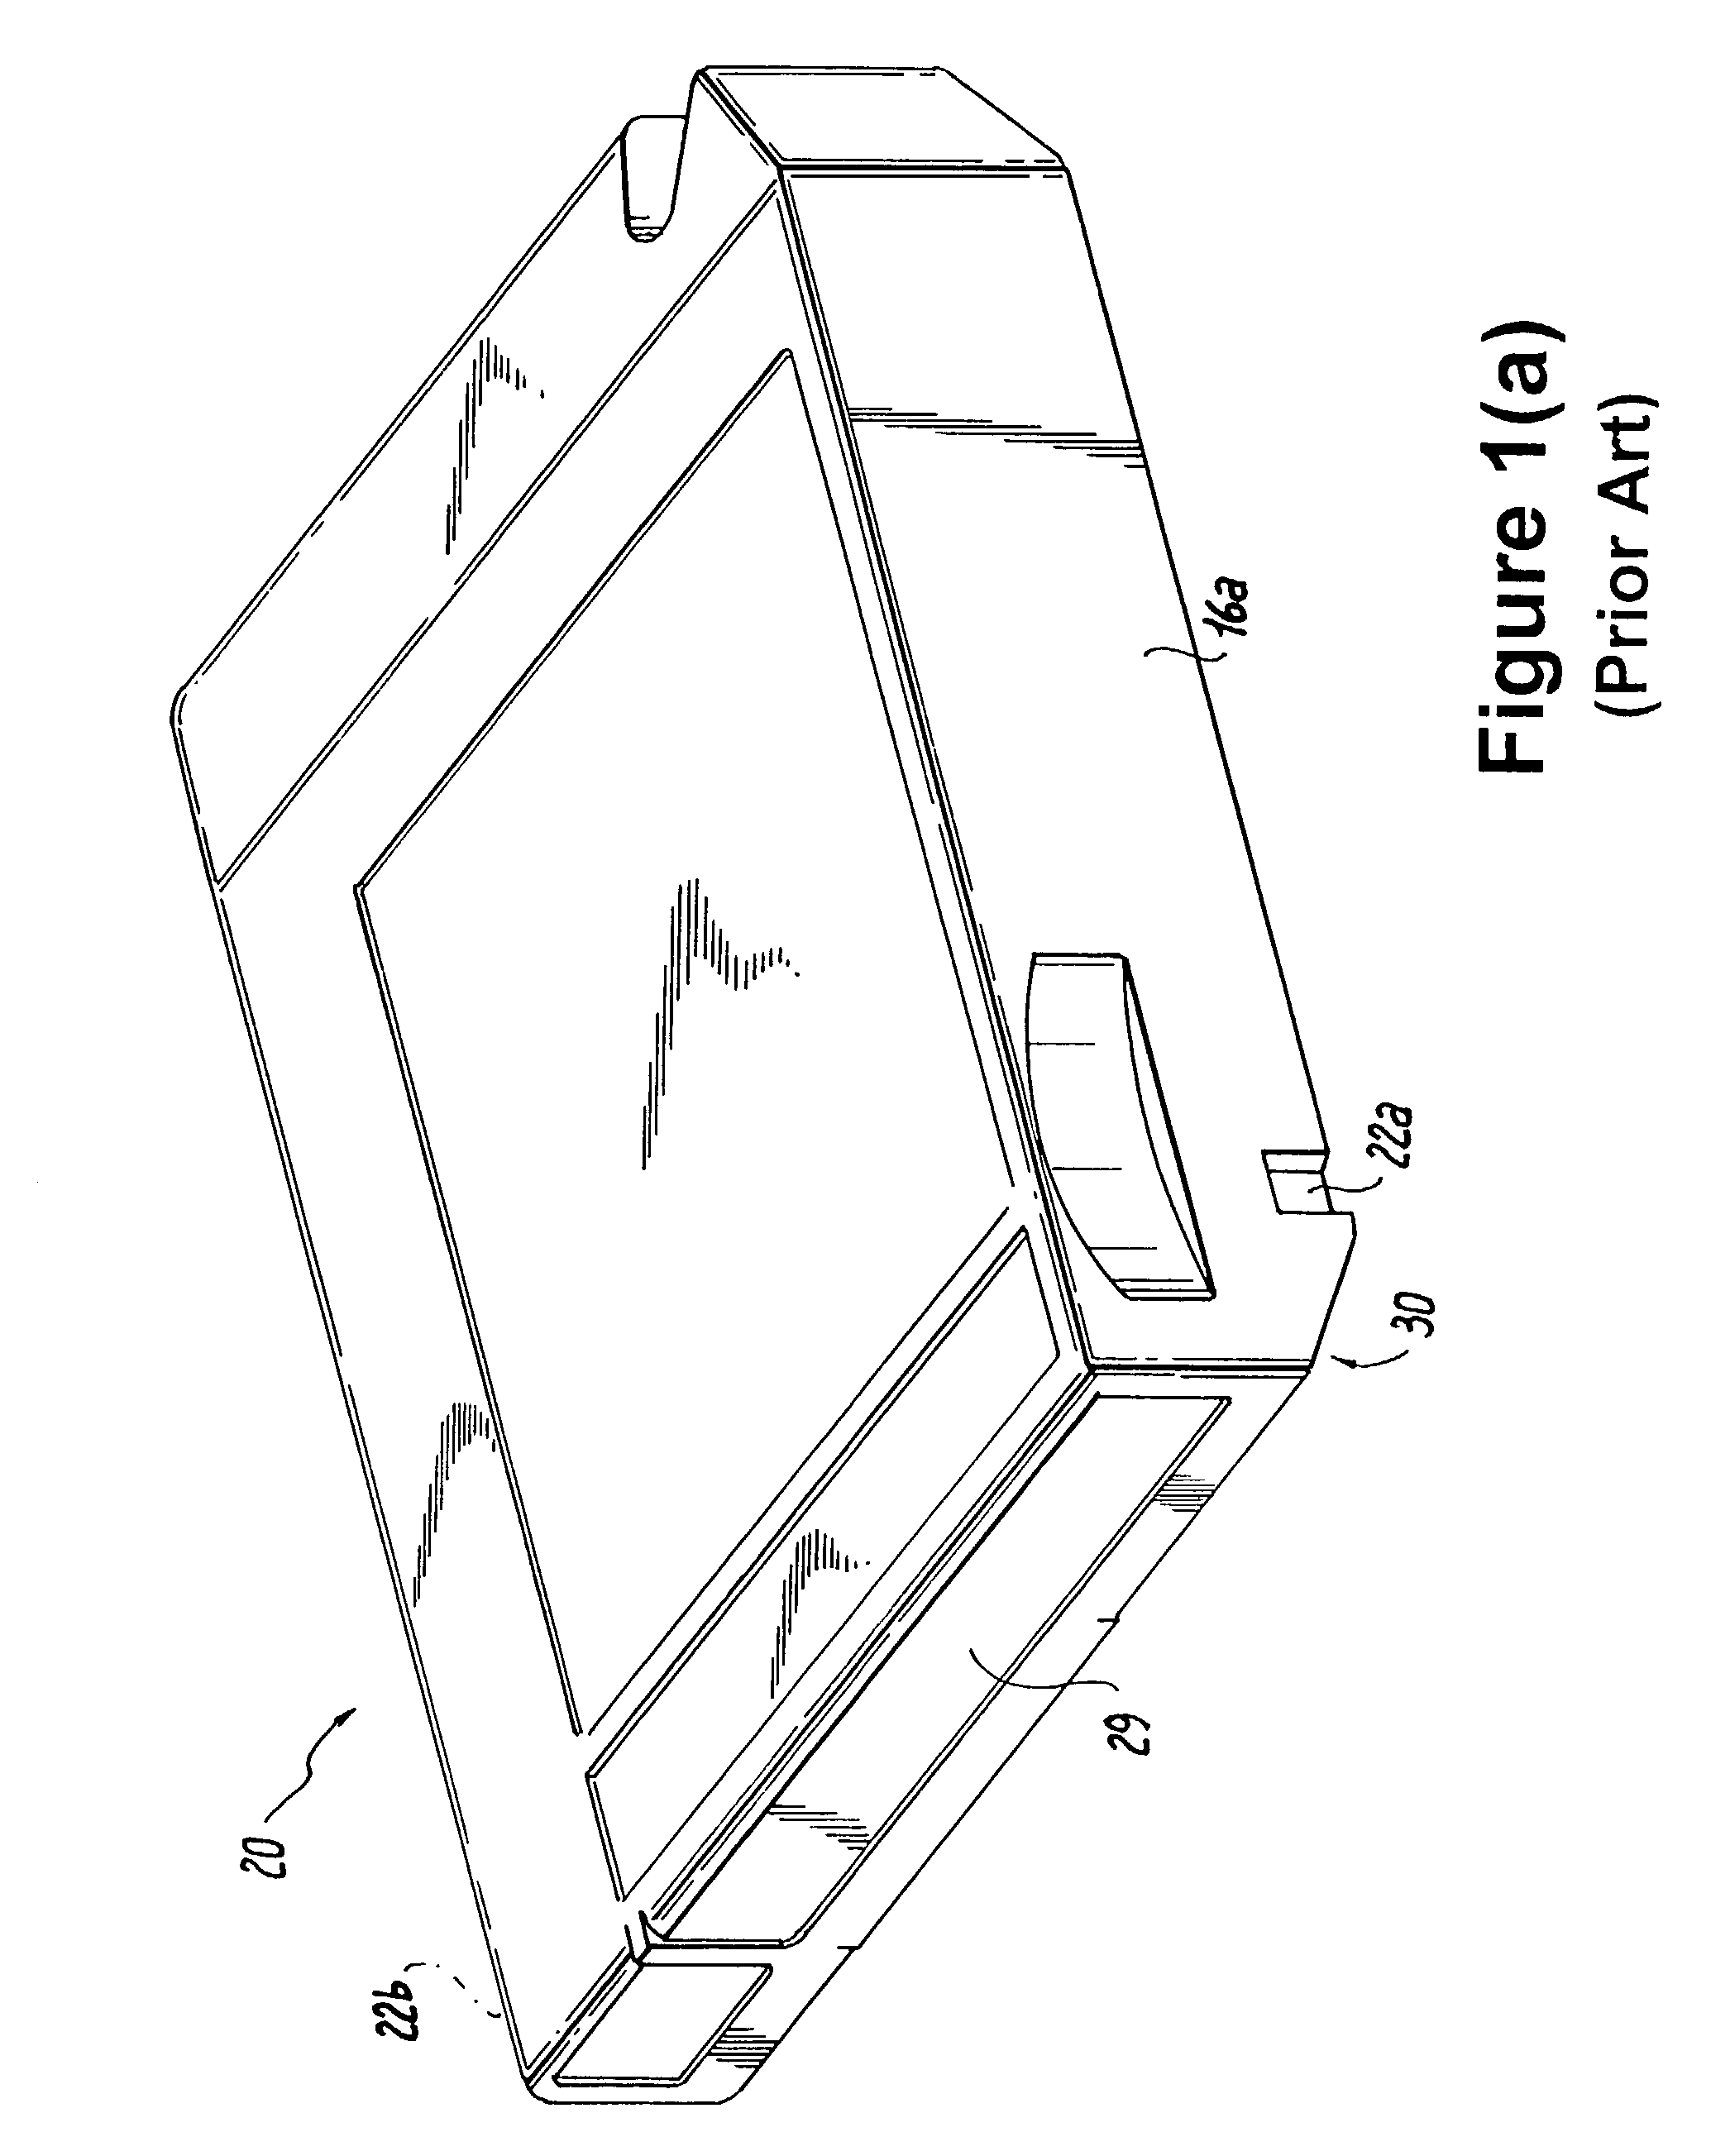 Gripper mechanism for tape cartridges